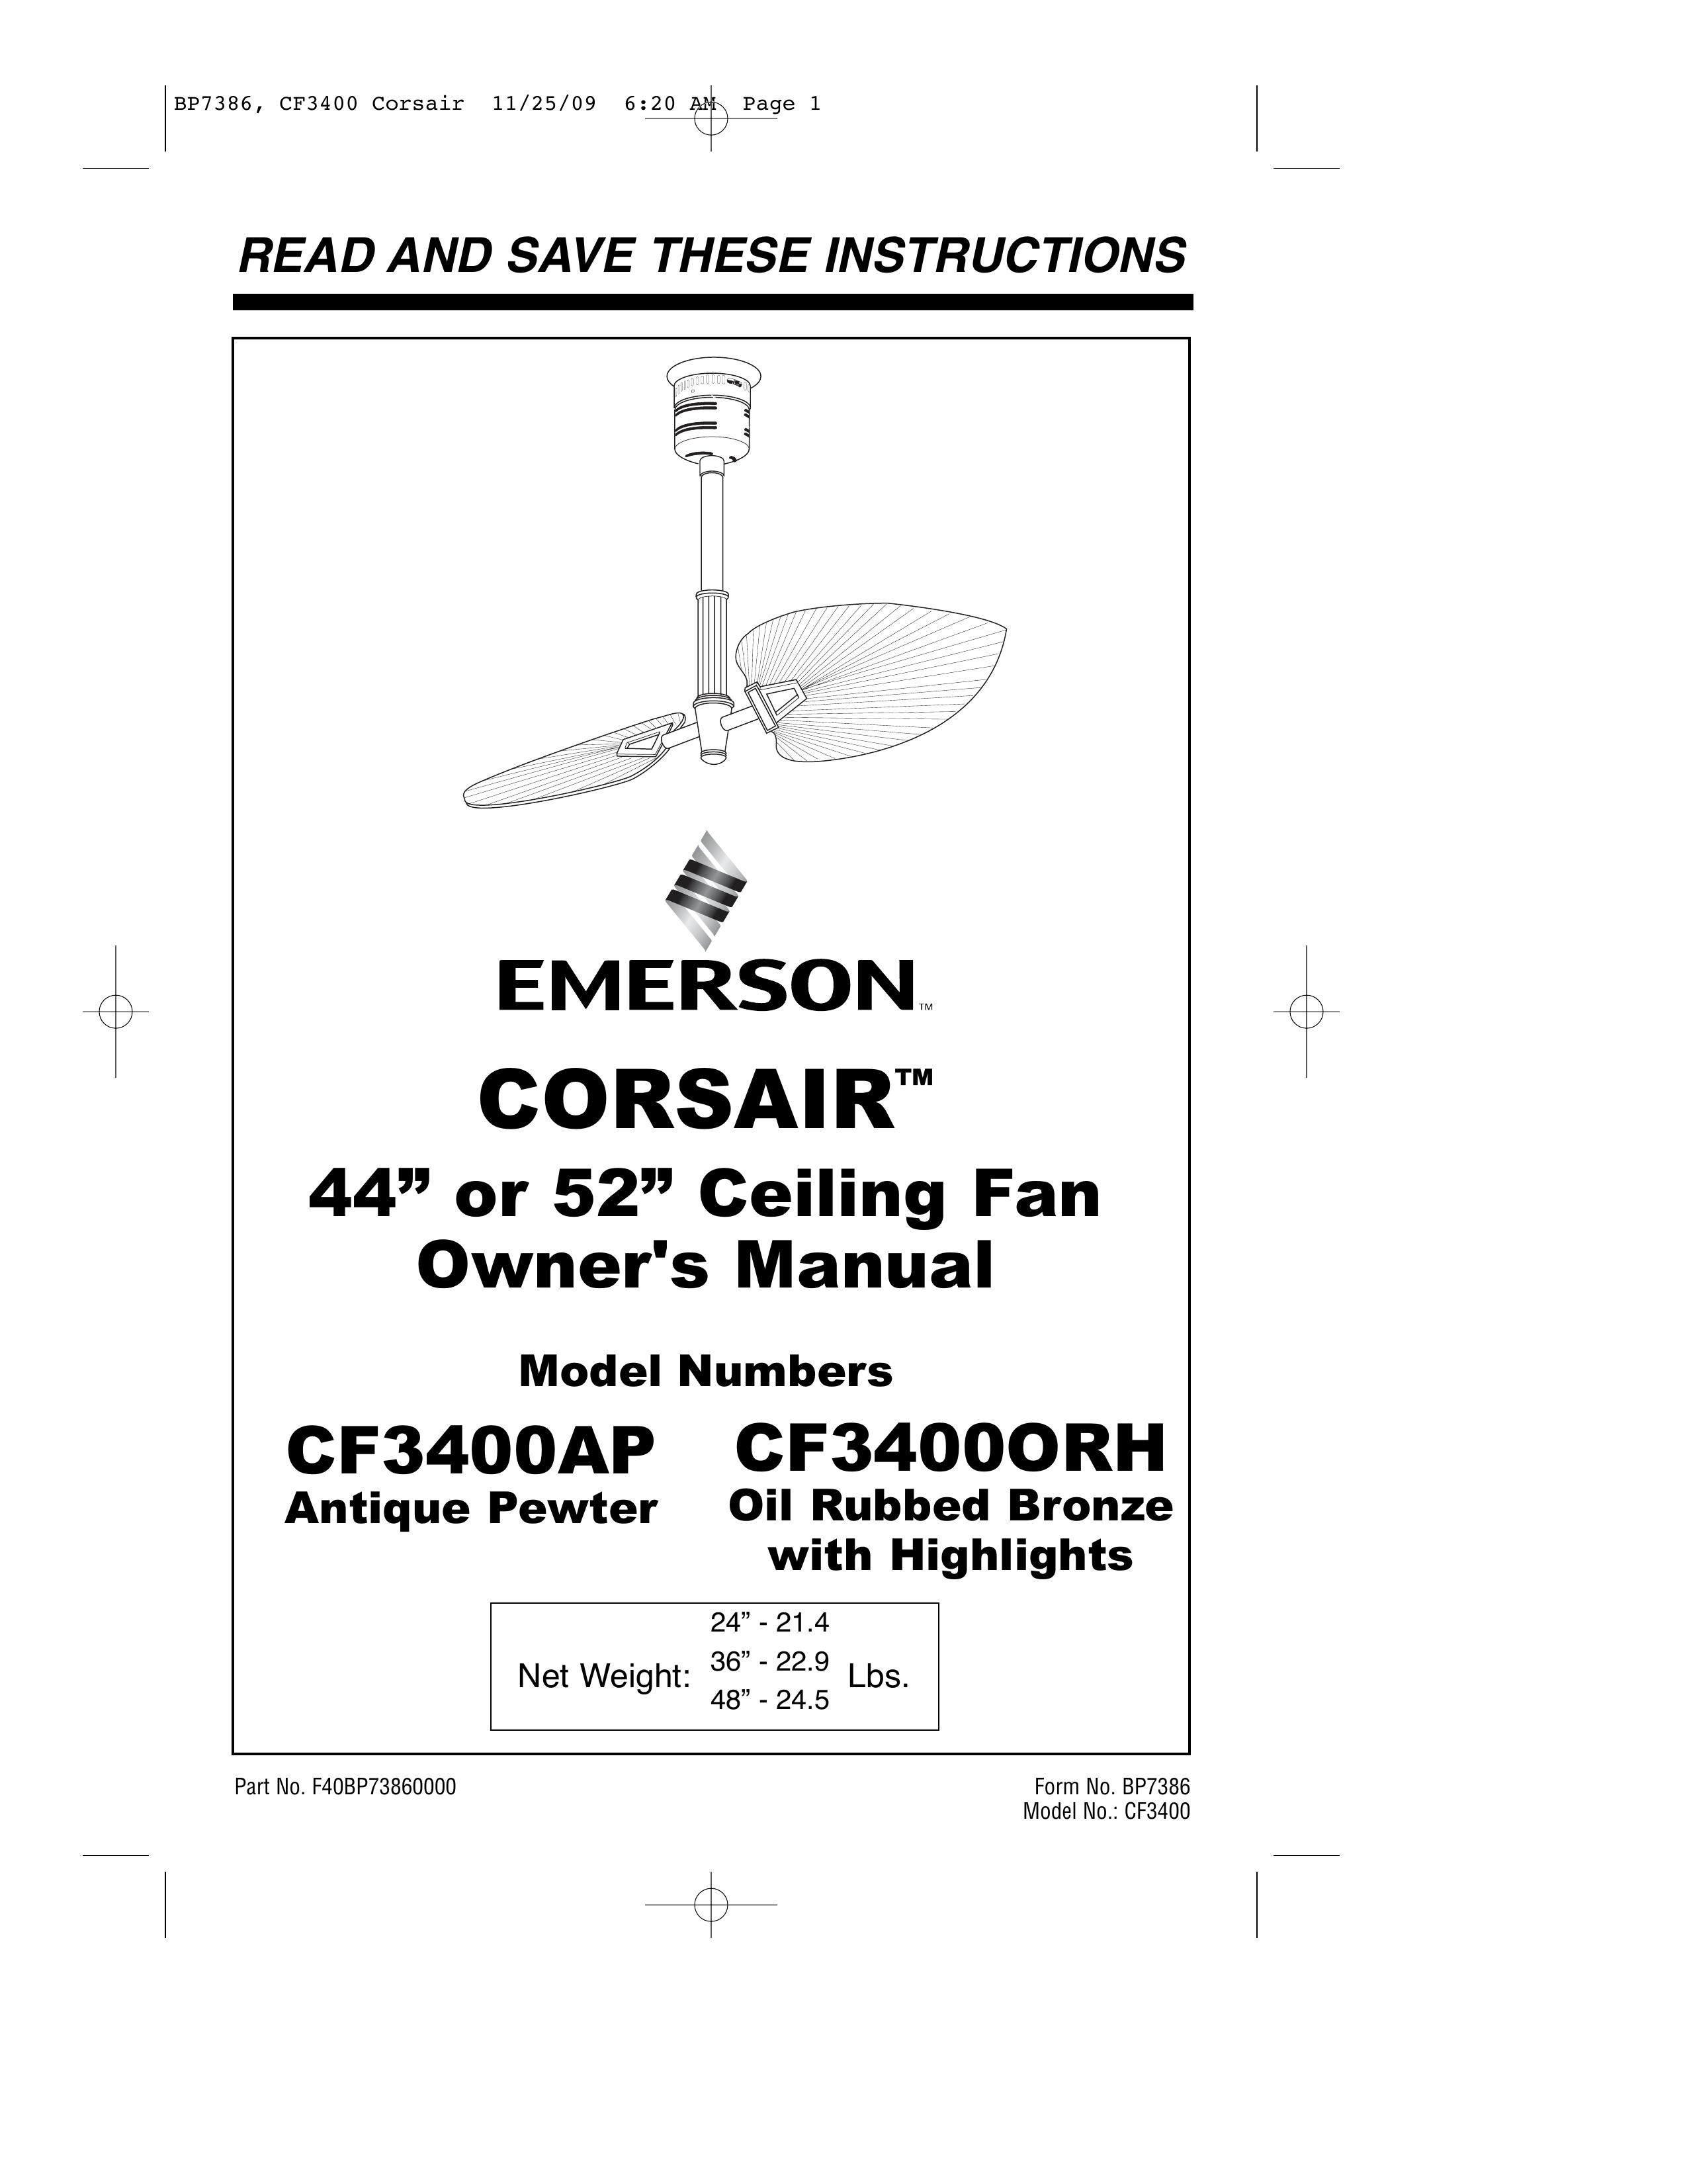 Emerson CF3400AP Outdoor Ceiling Fan User Manual